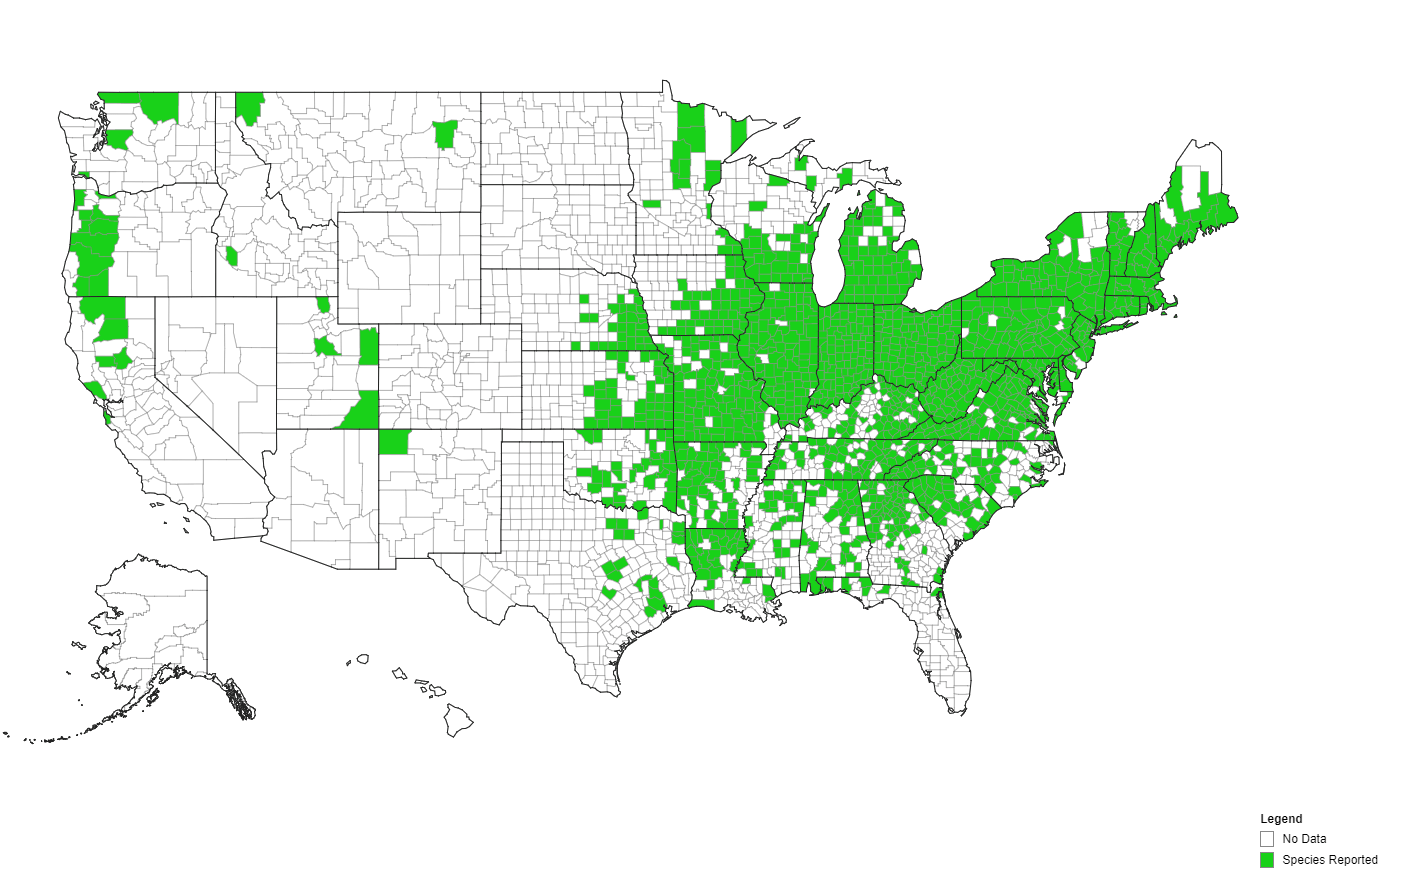 Multiflora rose US county distribution. Courtesy eddmaps.org.